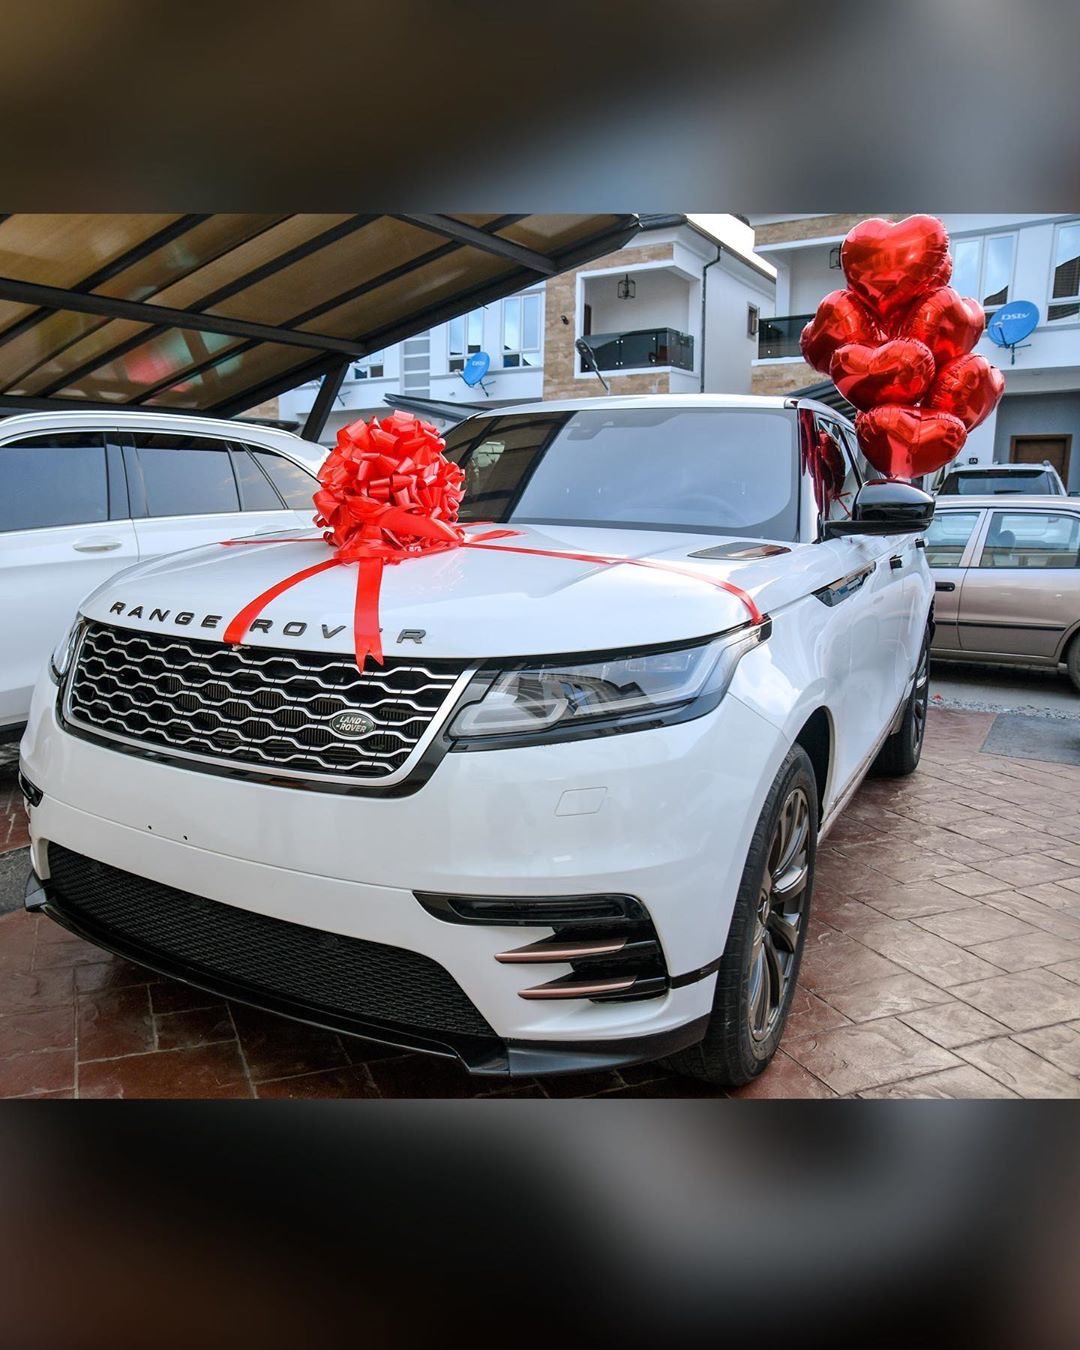 Mercy Eke Gifts Herself New Range Rover As Birthday Present